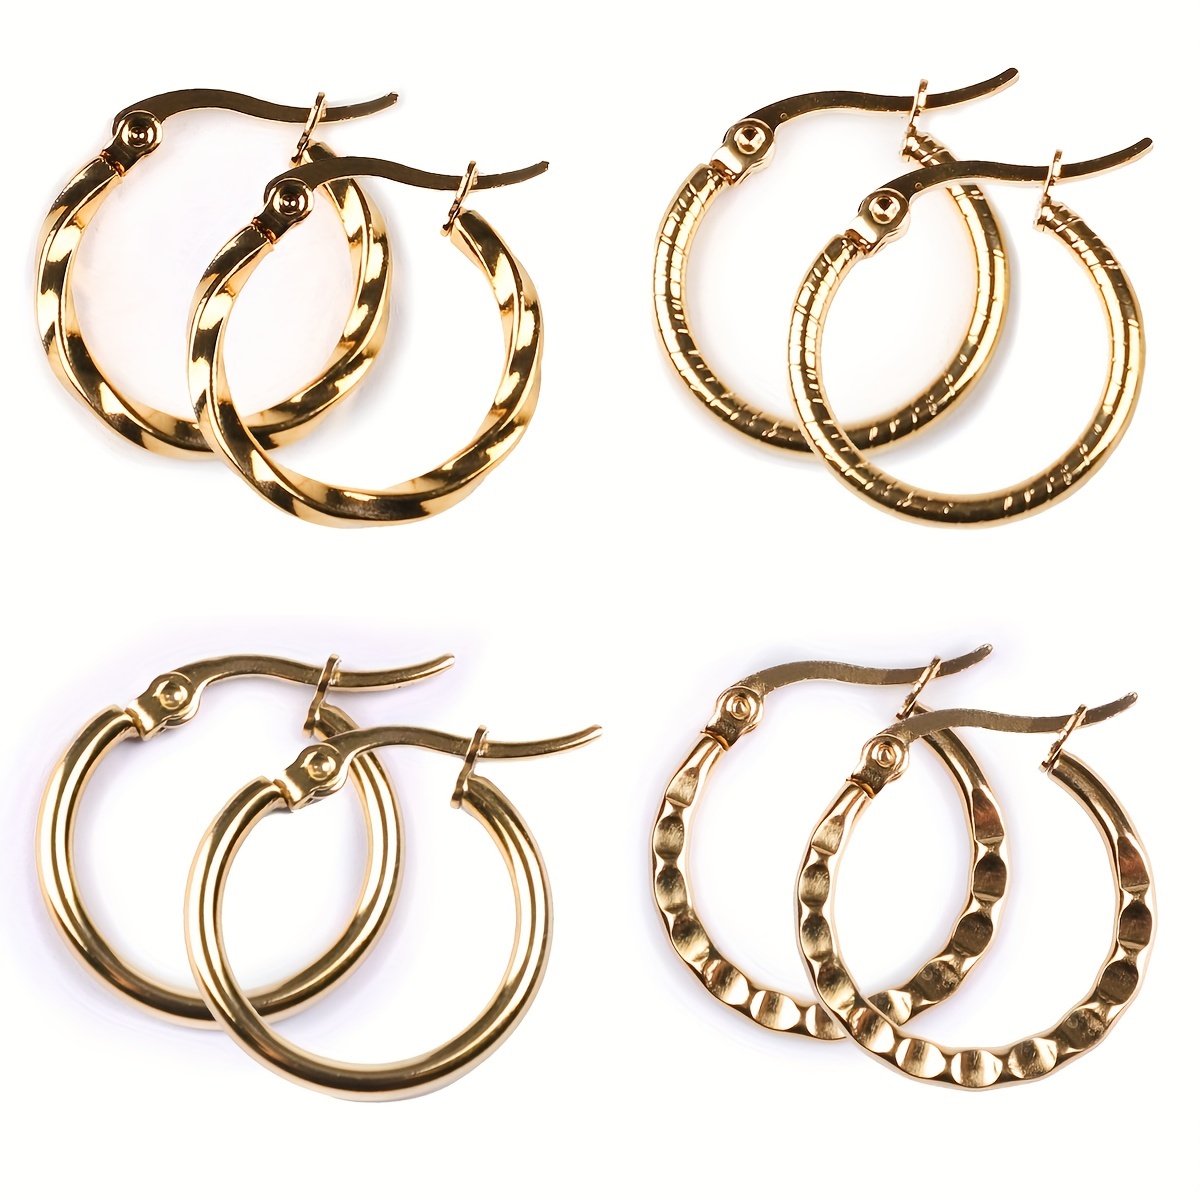 

Gorgeous 18k Gold Plated Hoop Earrings Set - 4 Pairs Of Stainless Steel Hypoallergenic Earrings For Women & Girls